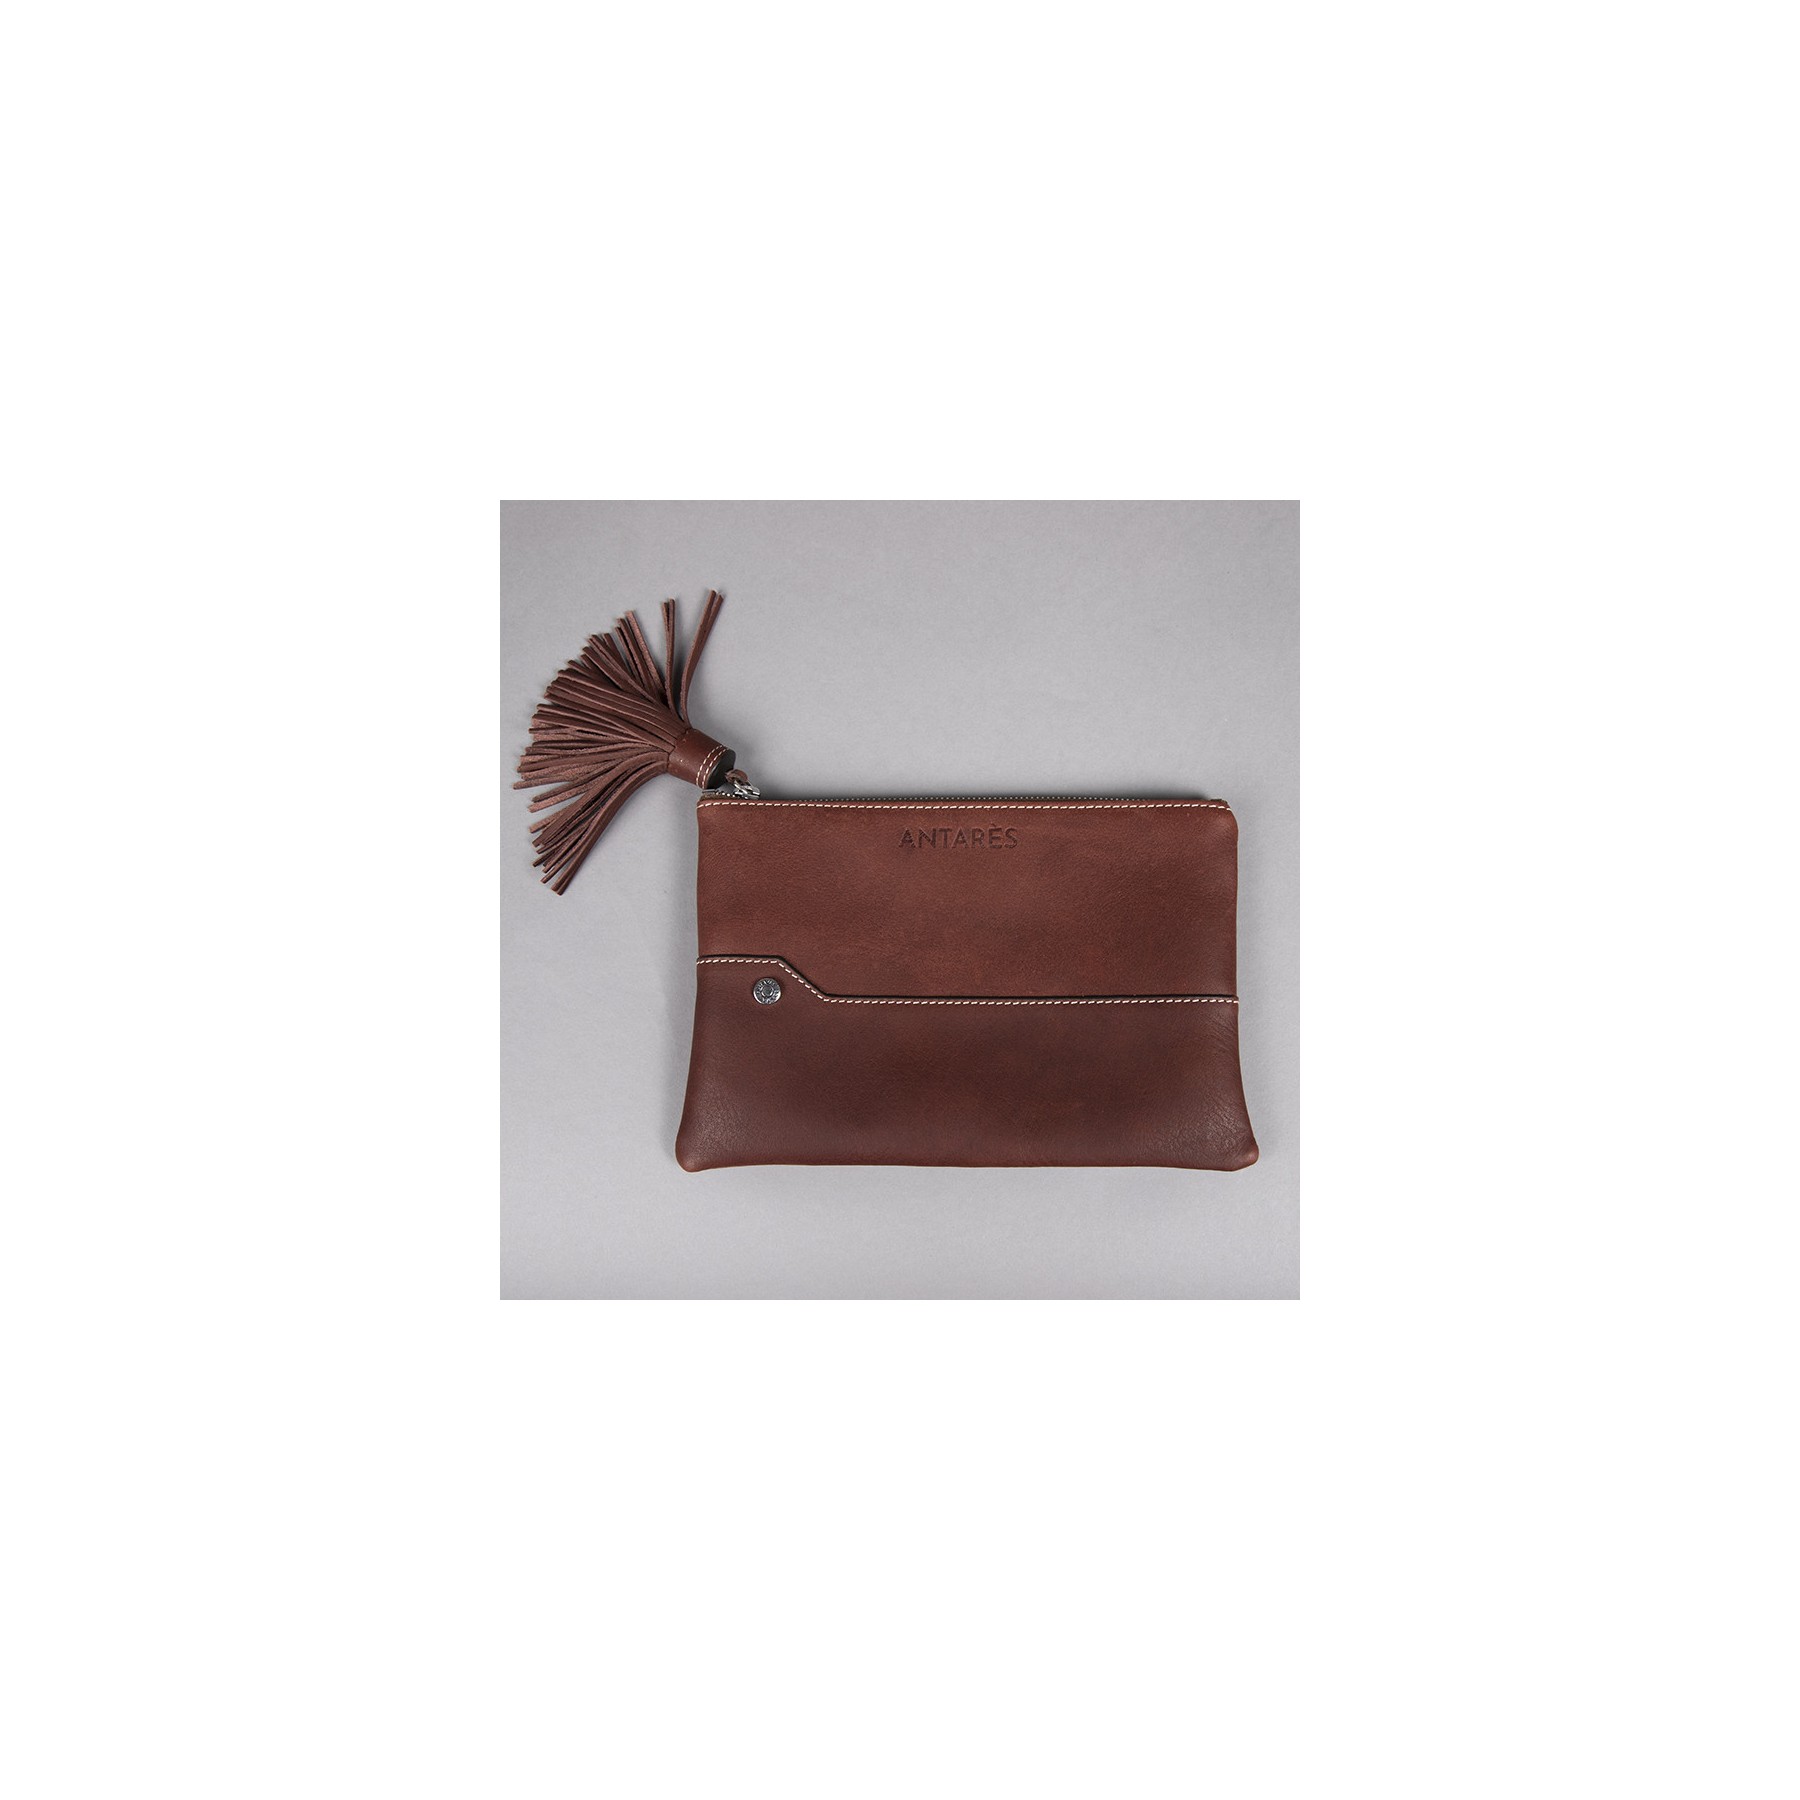 ETHNIC TASSEL PURSE Native American Fringe Leather Bag -  Norway